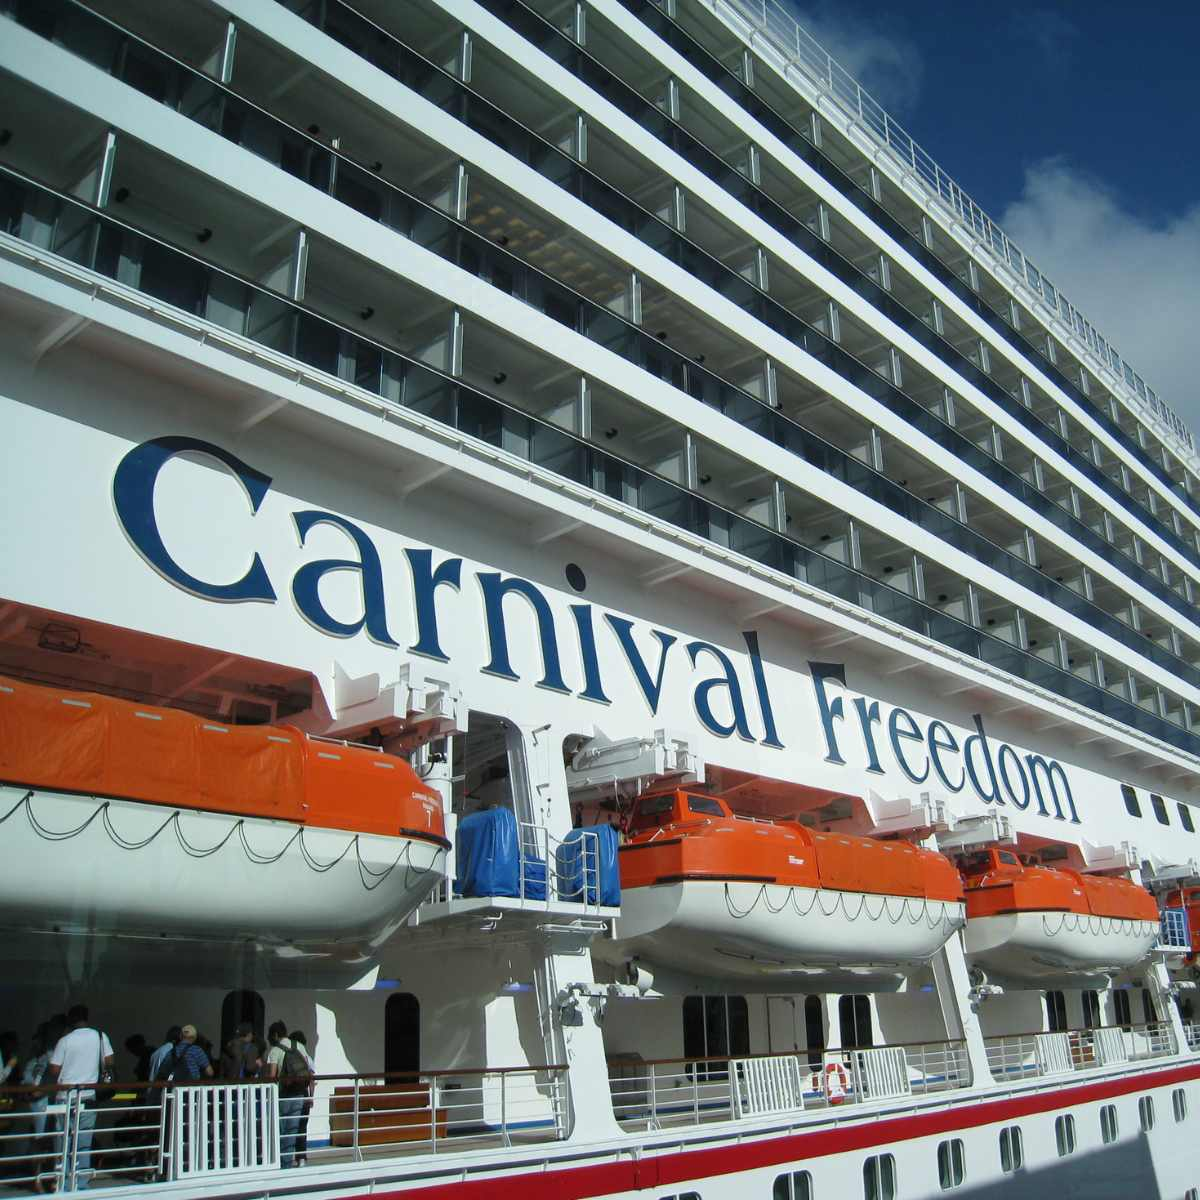 Carnival Freedom Cruise Ship Lifeboats